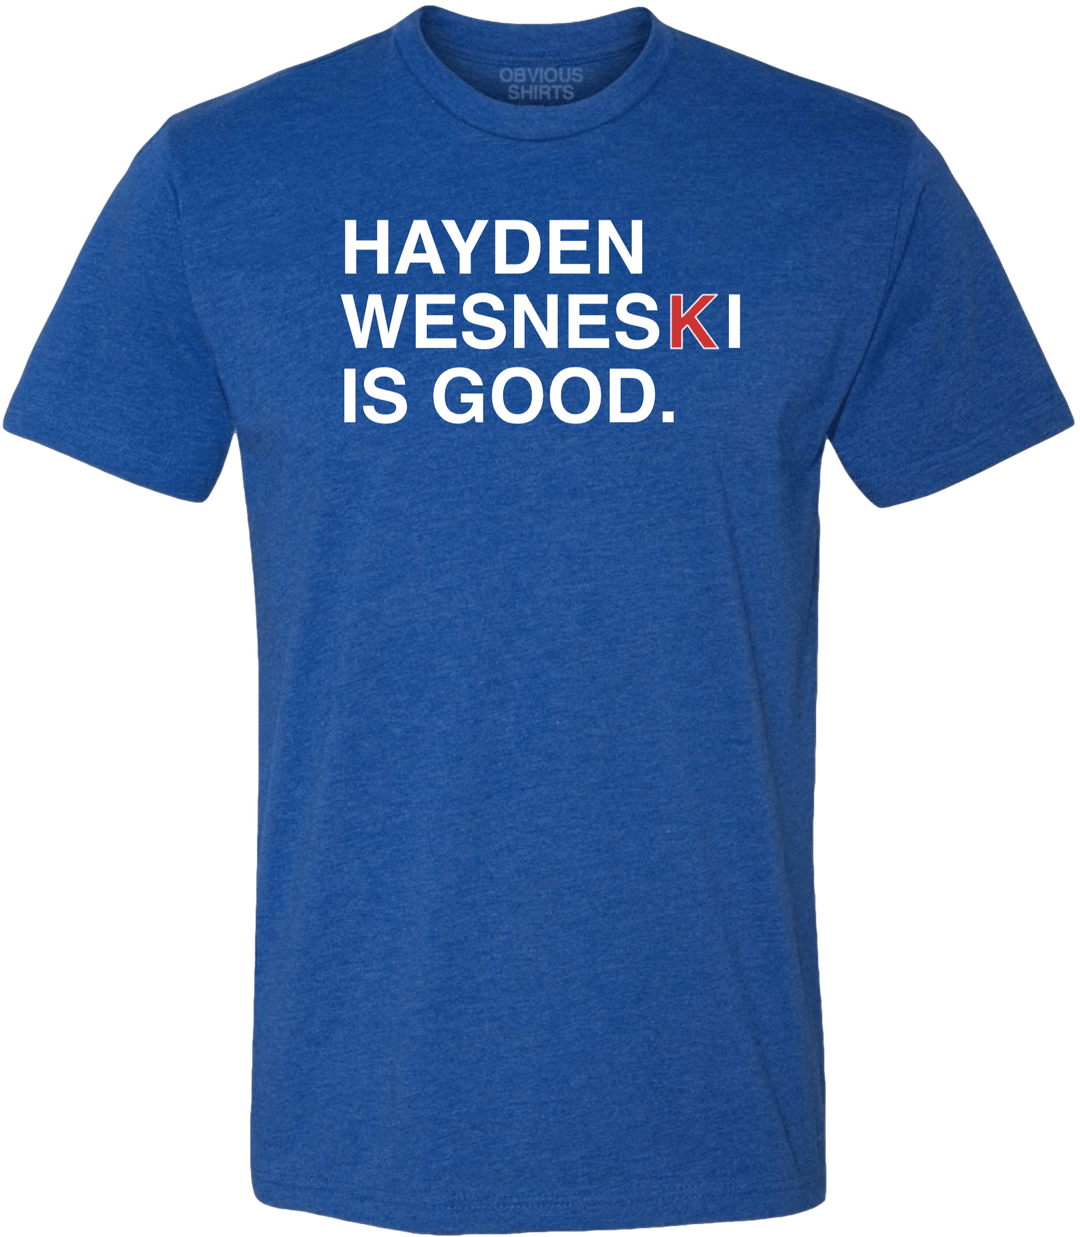 HAYDEN WESNESKI IS GOOD. - OBVIOUS SHIRTS